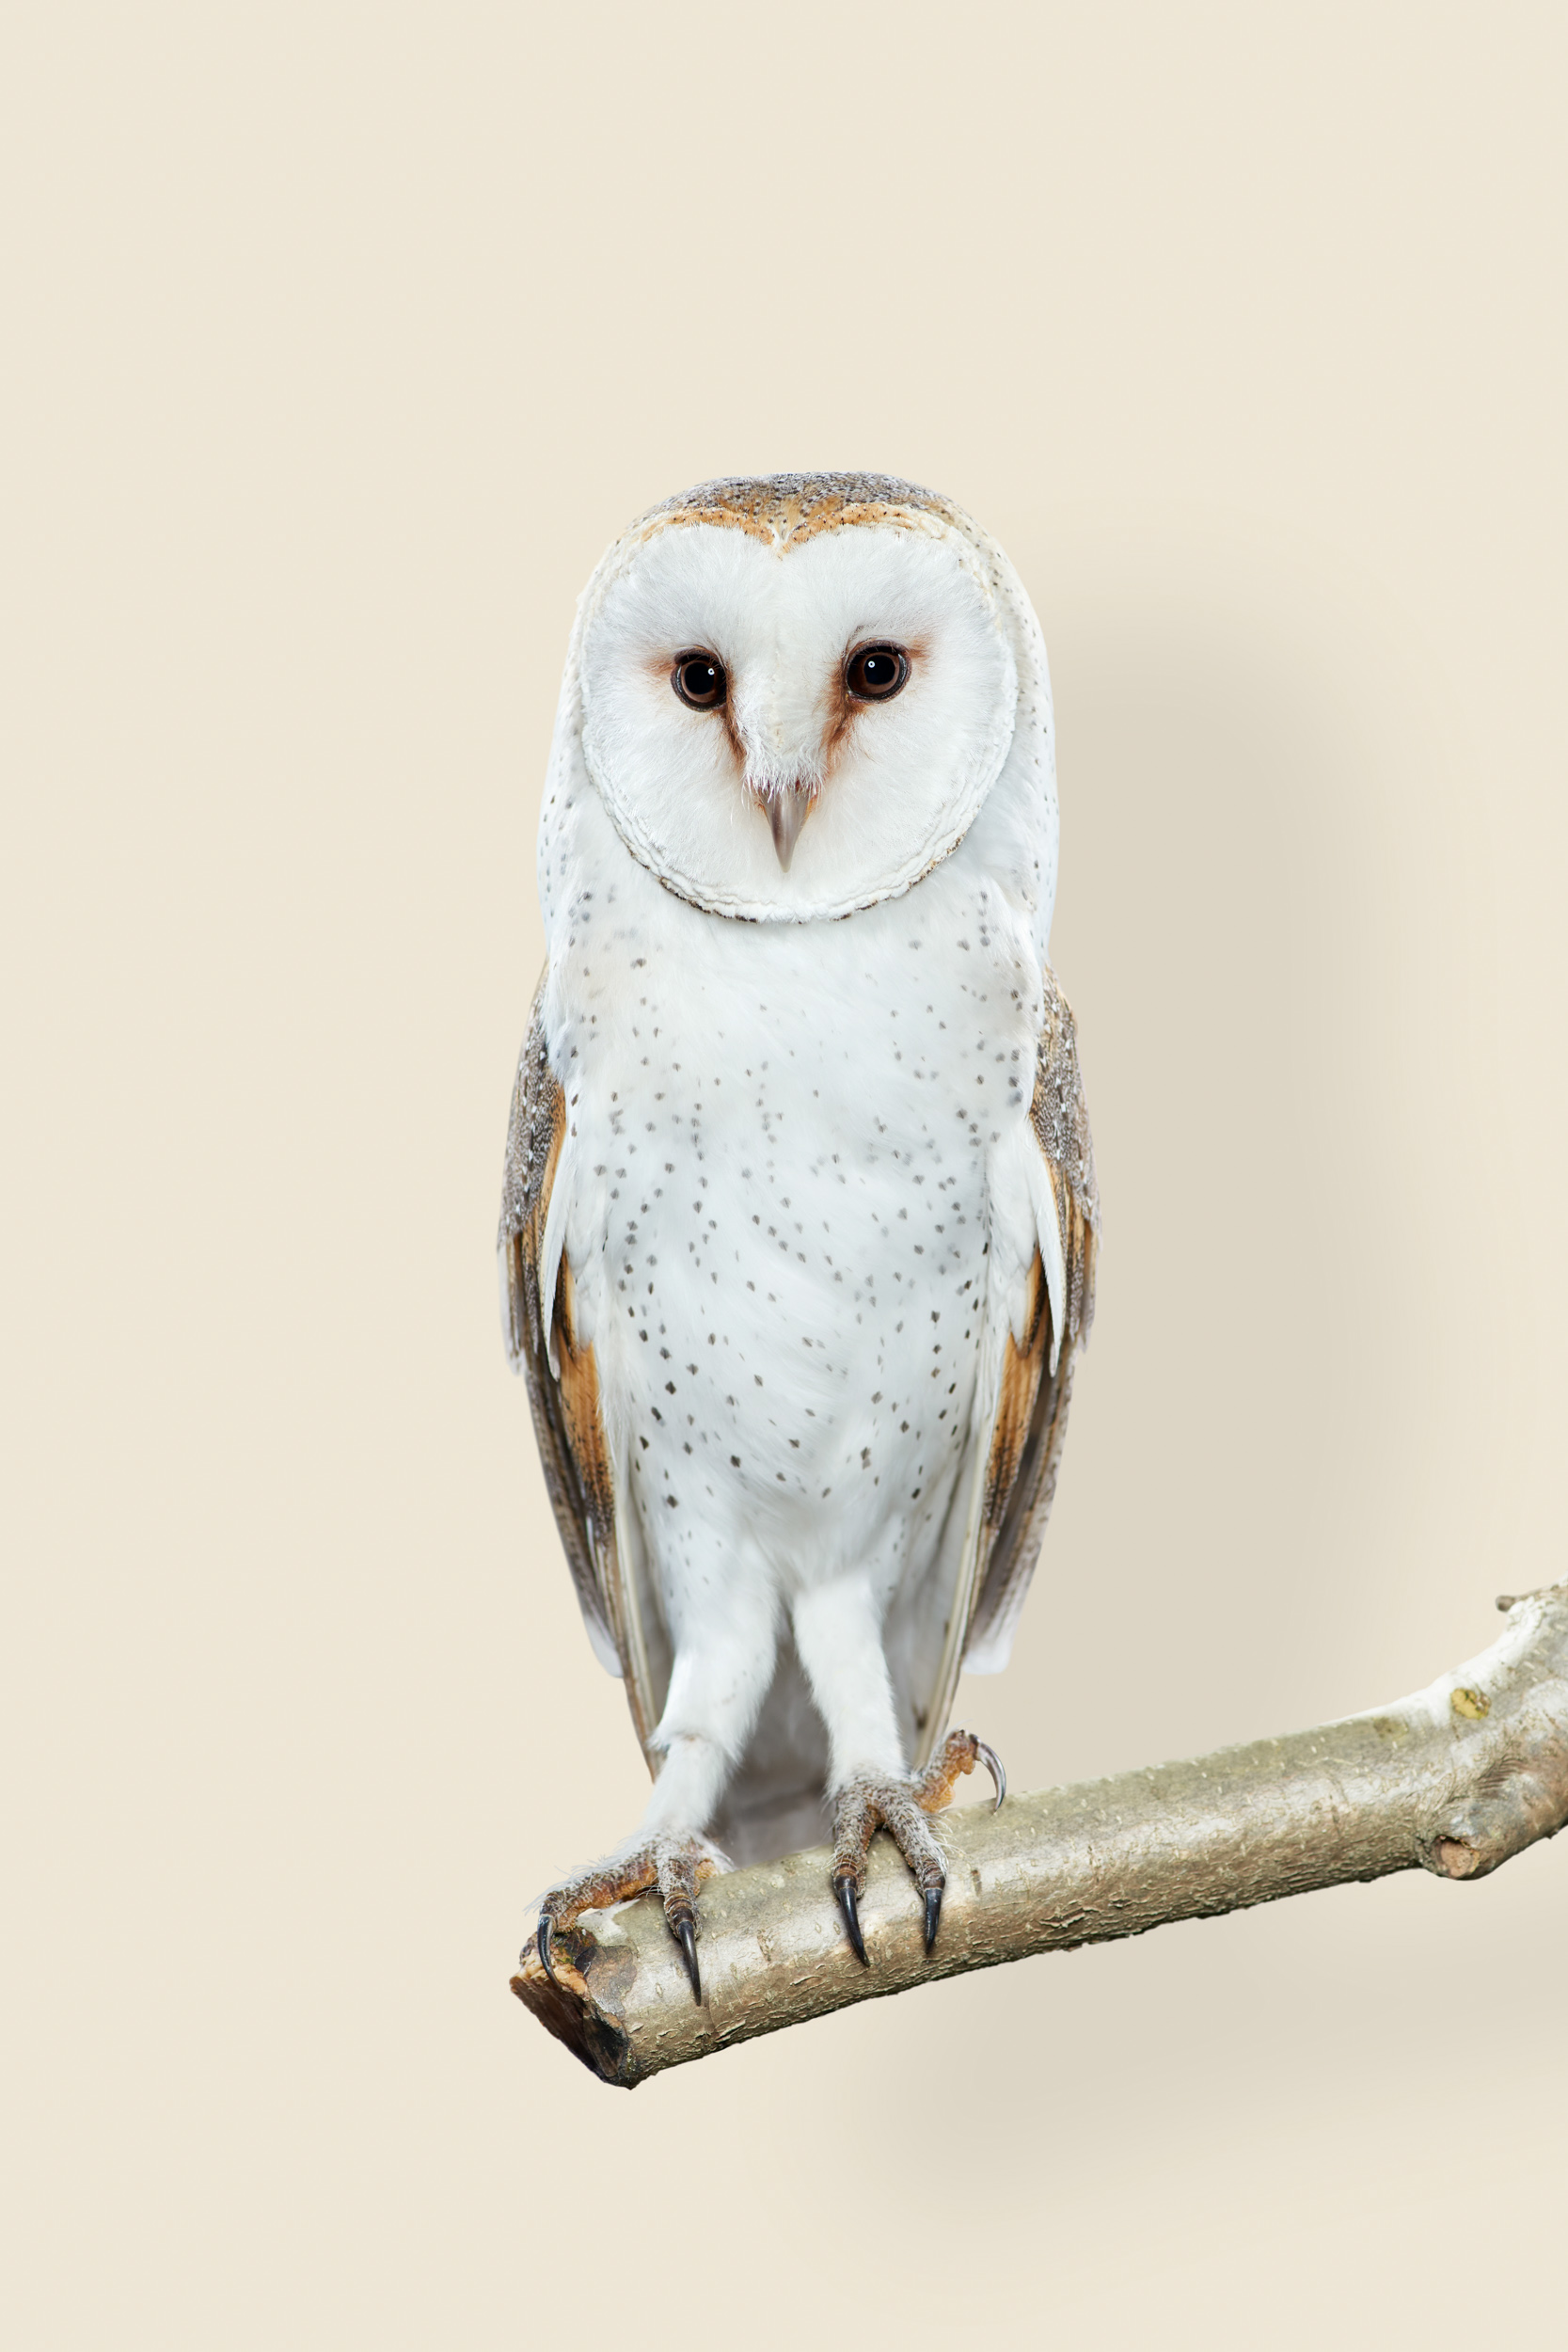 Tyto alba (barn owl)